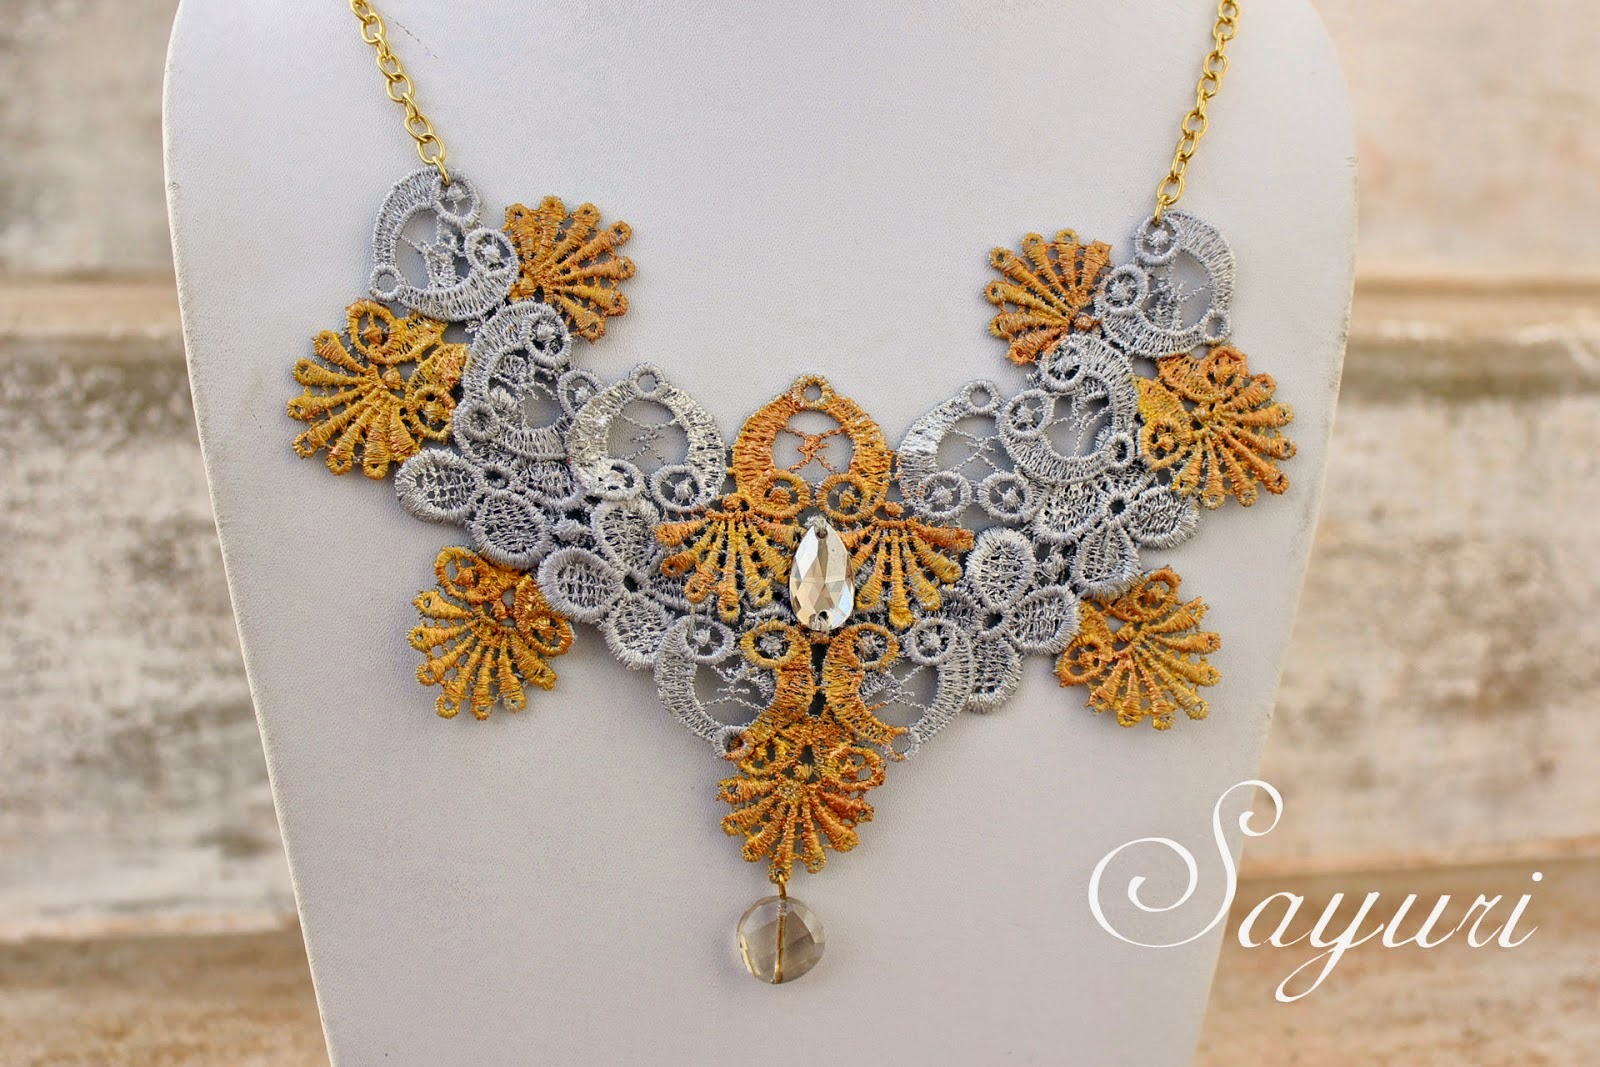 http://www.jewelsofsayuri.com/2014/08/metallic-lace-necklace-diy.html